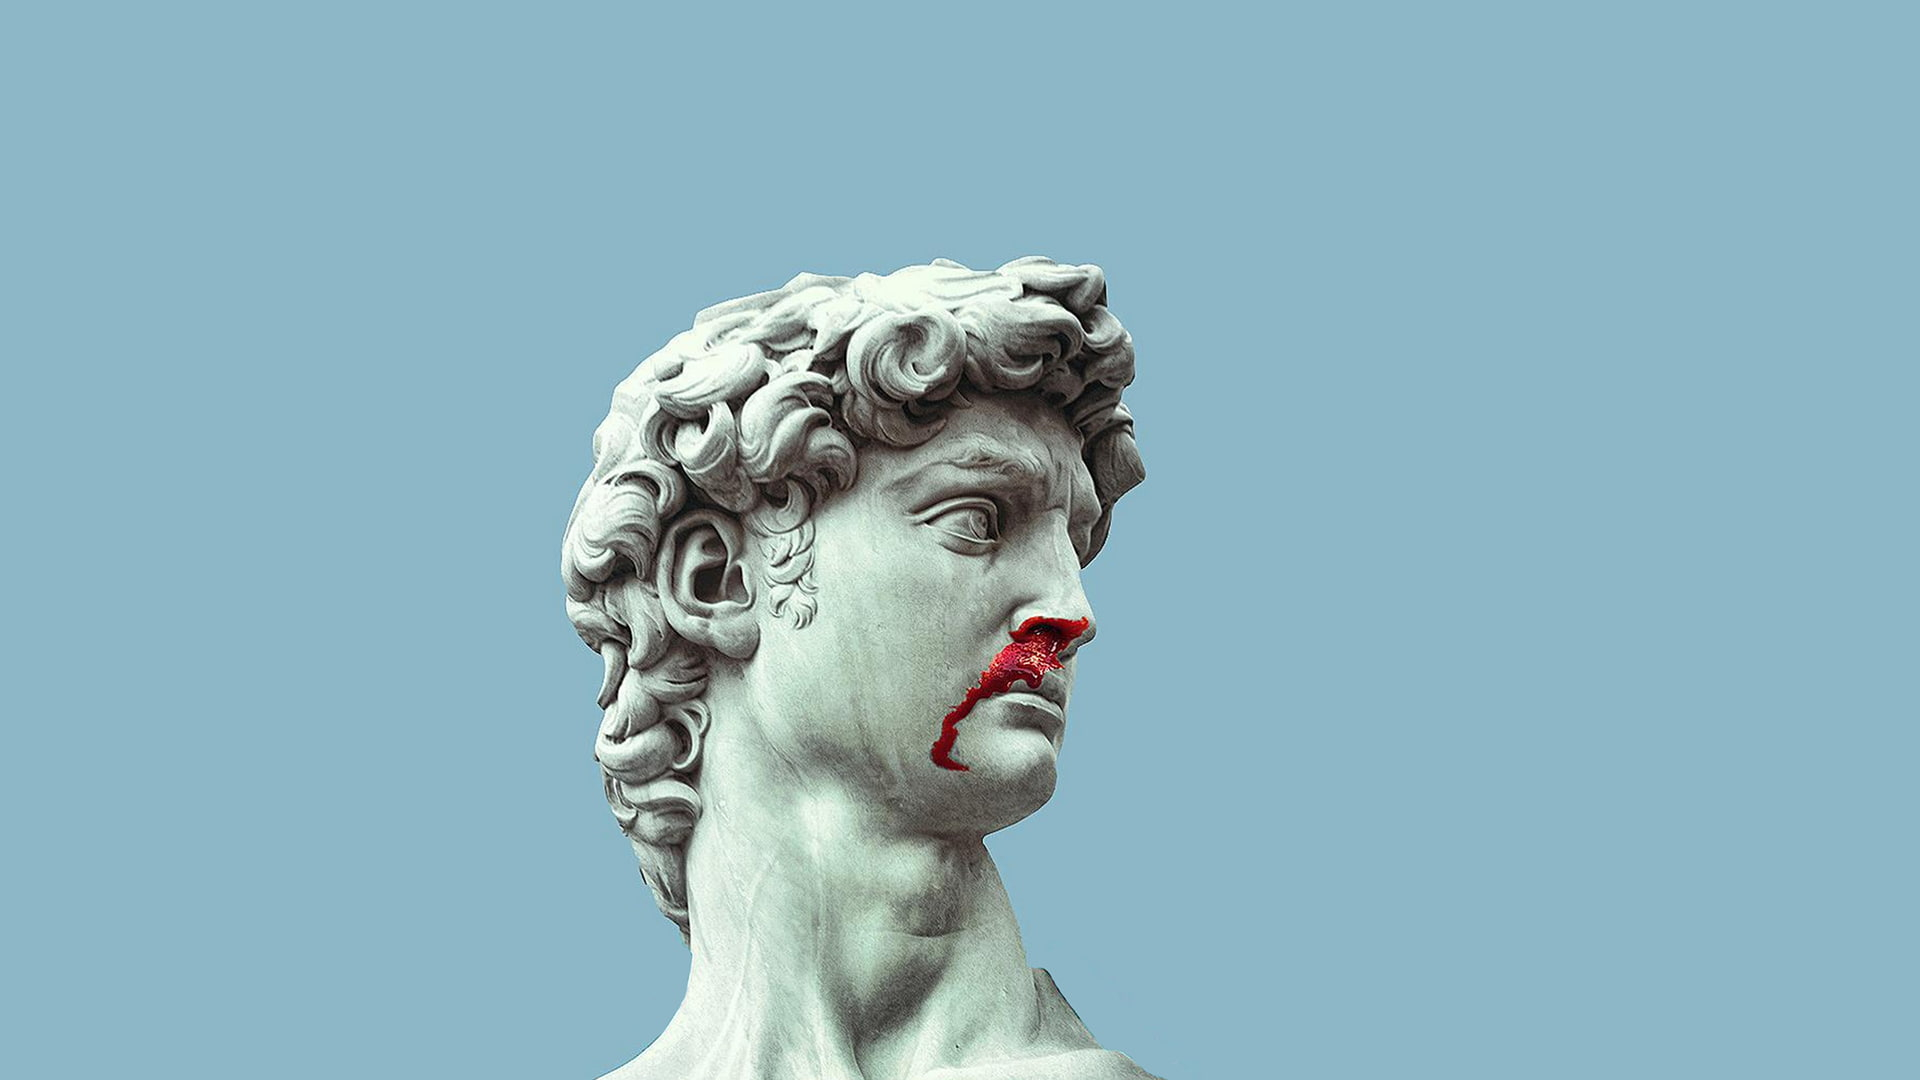 Statue of David marble blood sculpture art and craft representation wallpaper